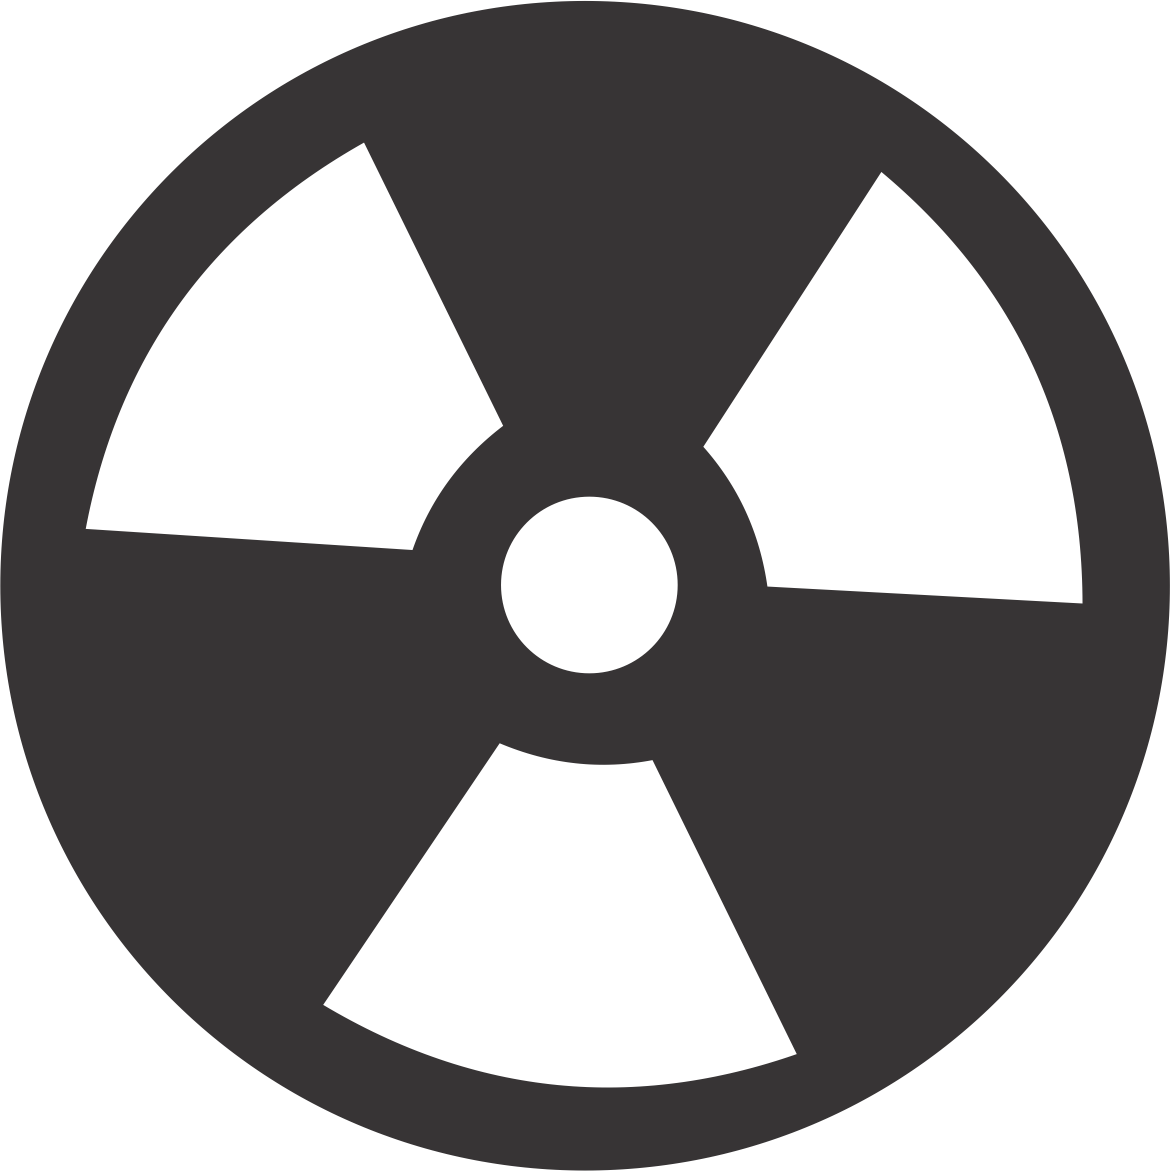 radiation sign